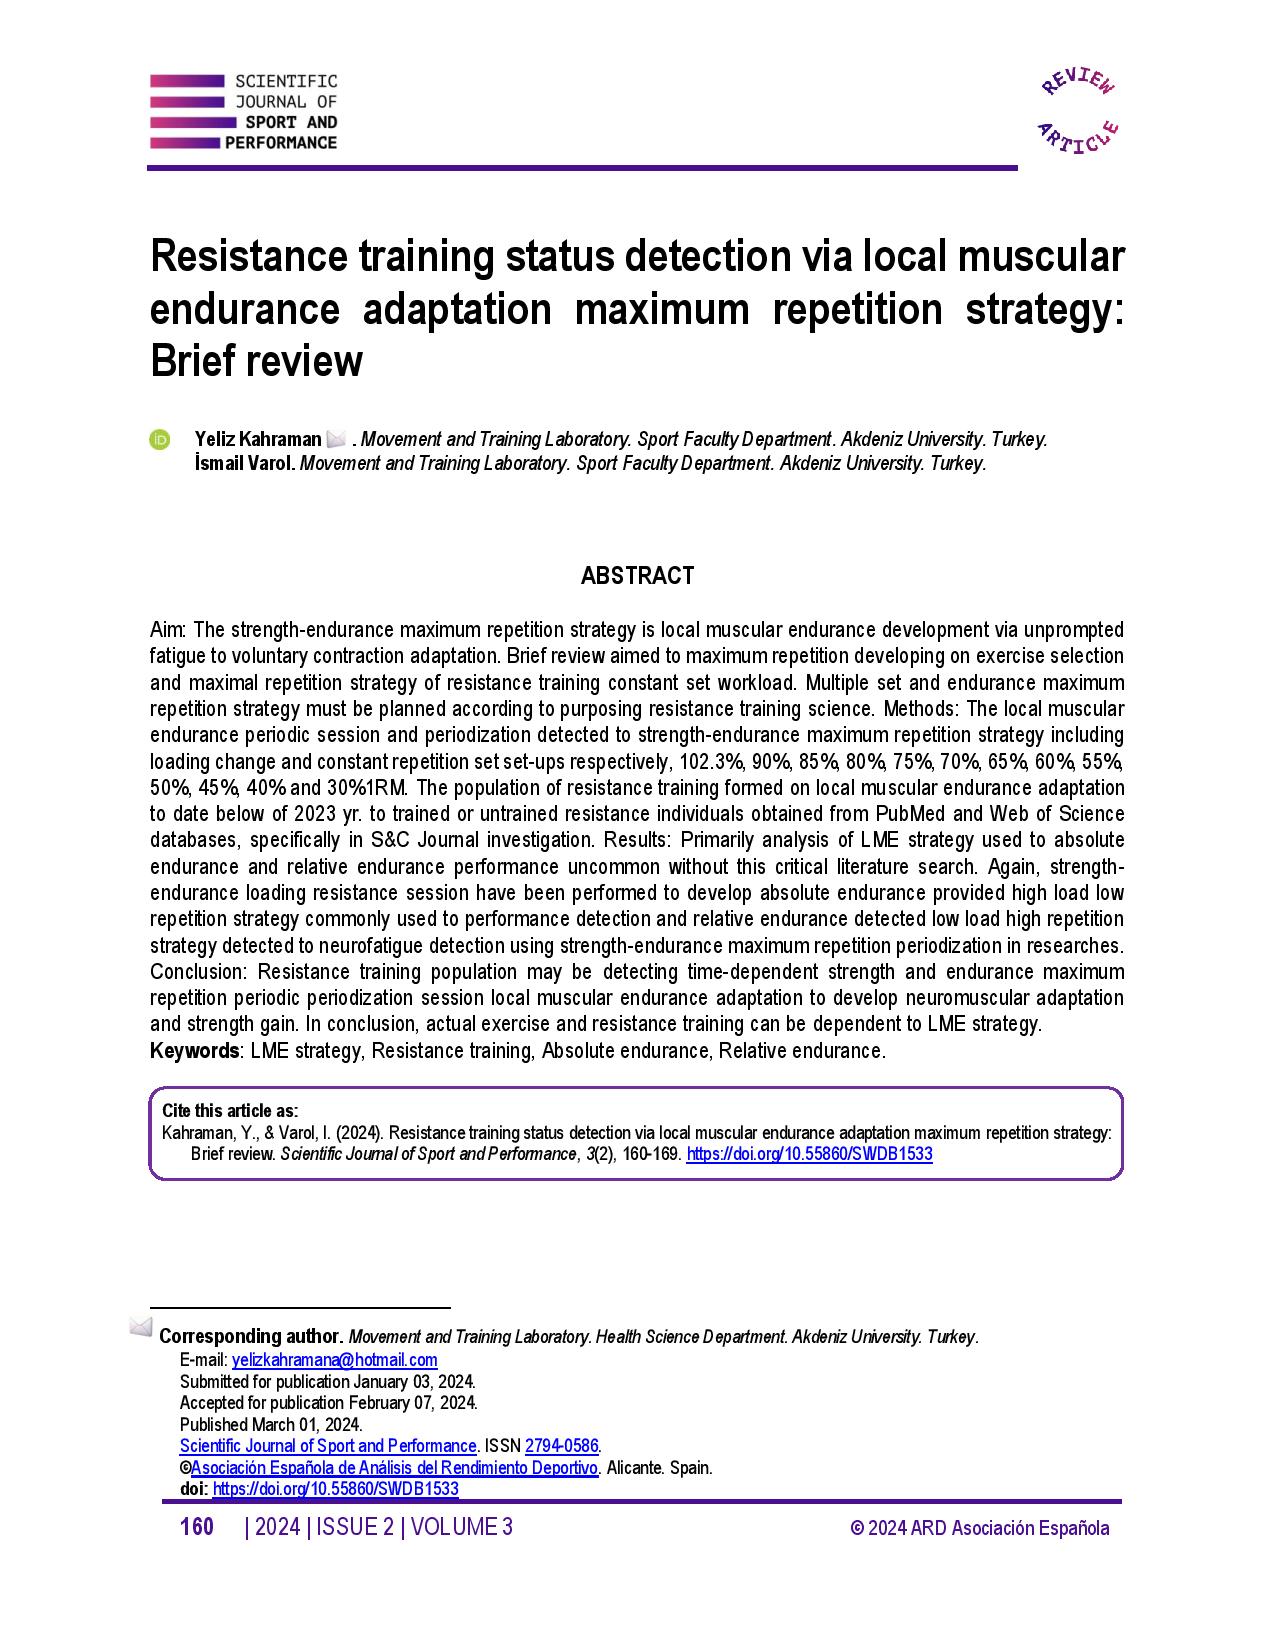 Resistance training status detection via local muscular endurance adaptation maximum repetition strategy